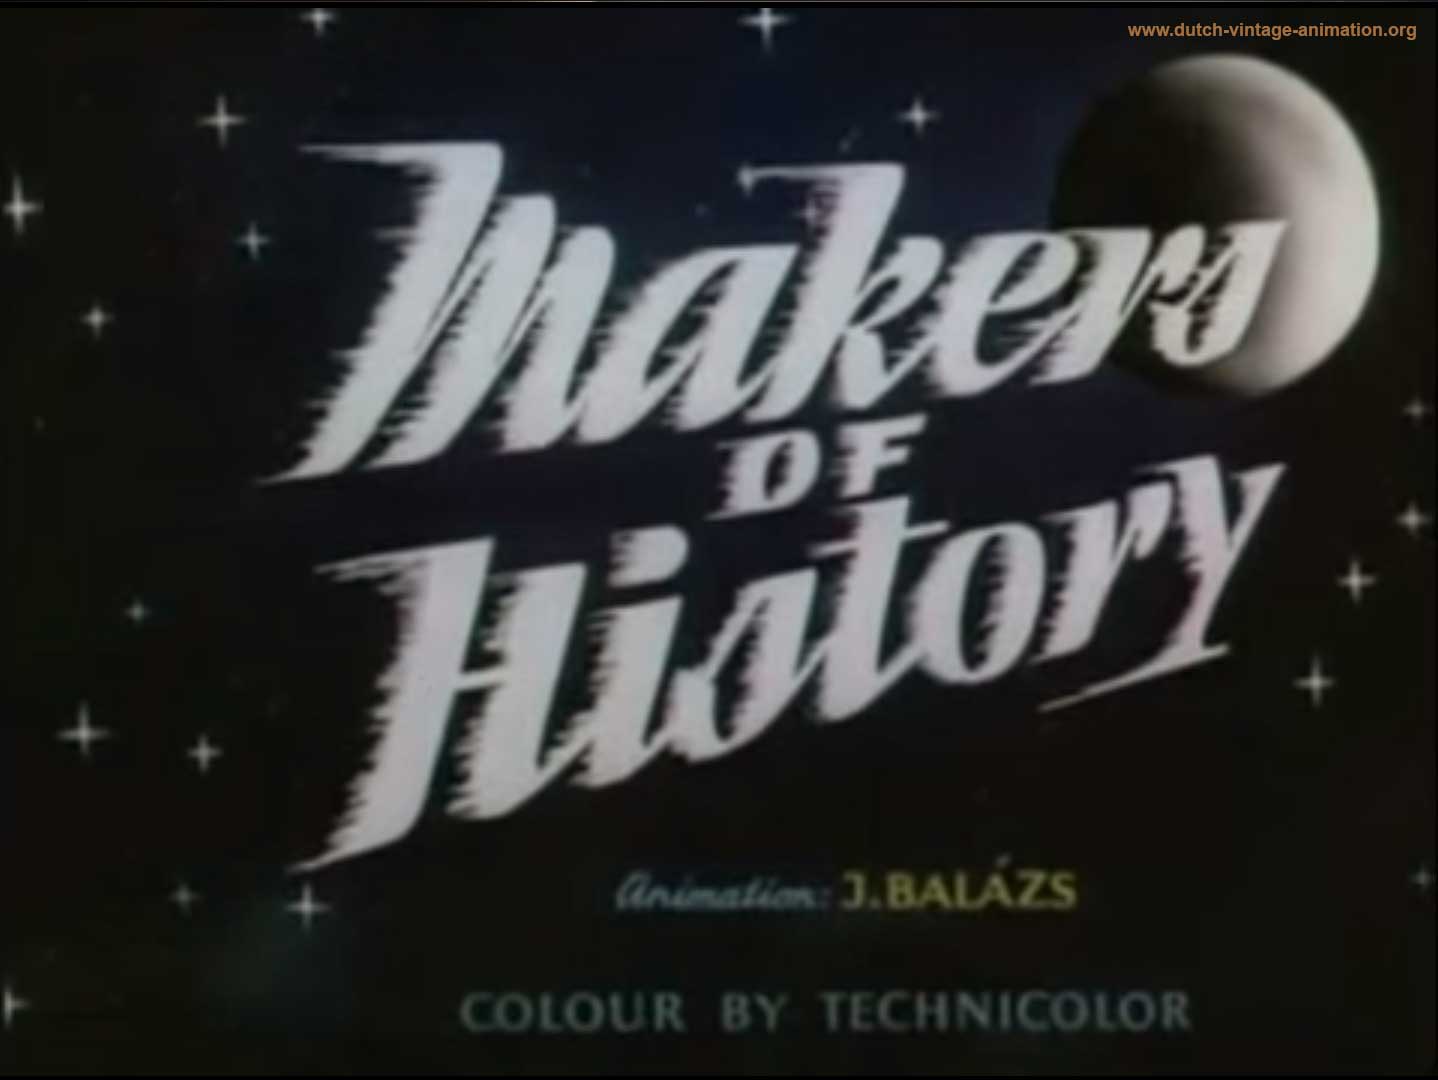 1955-Makers-of-History-1.jpg